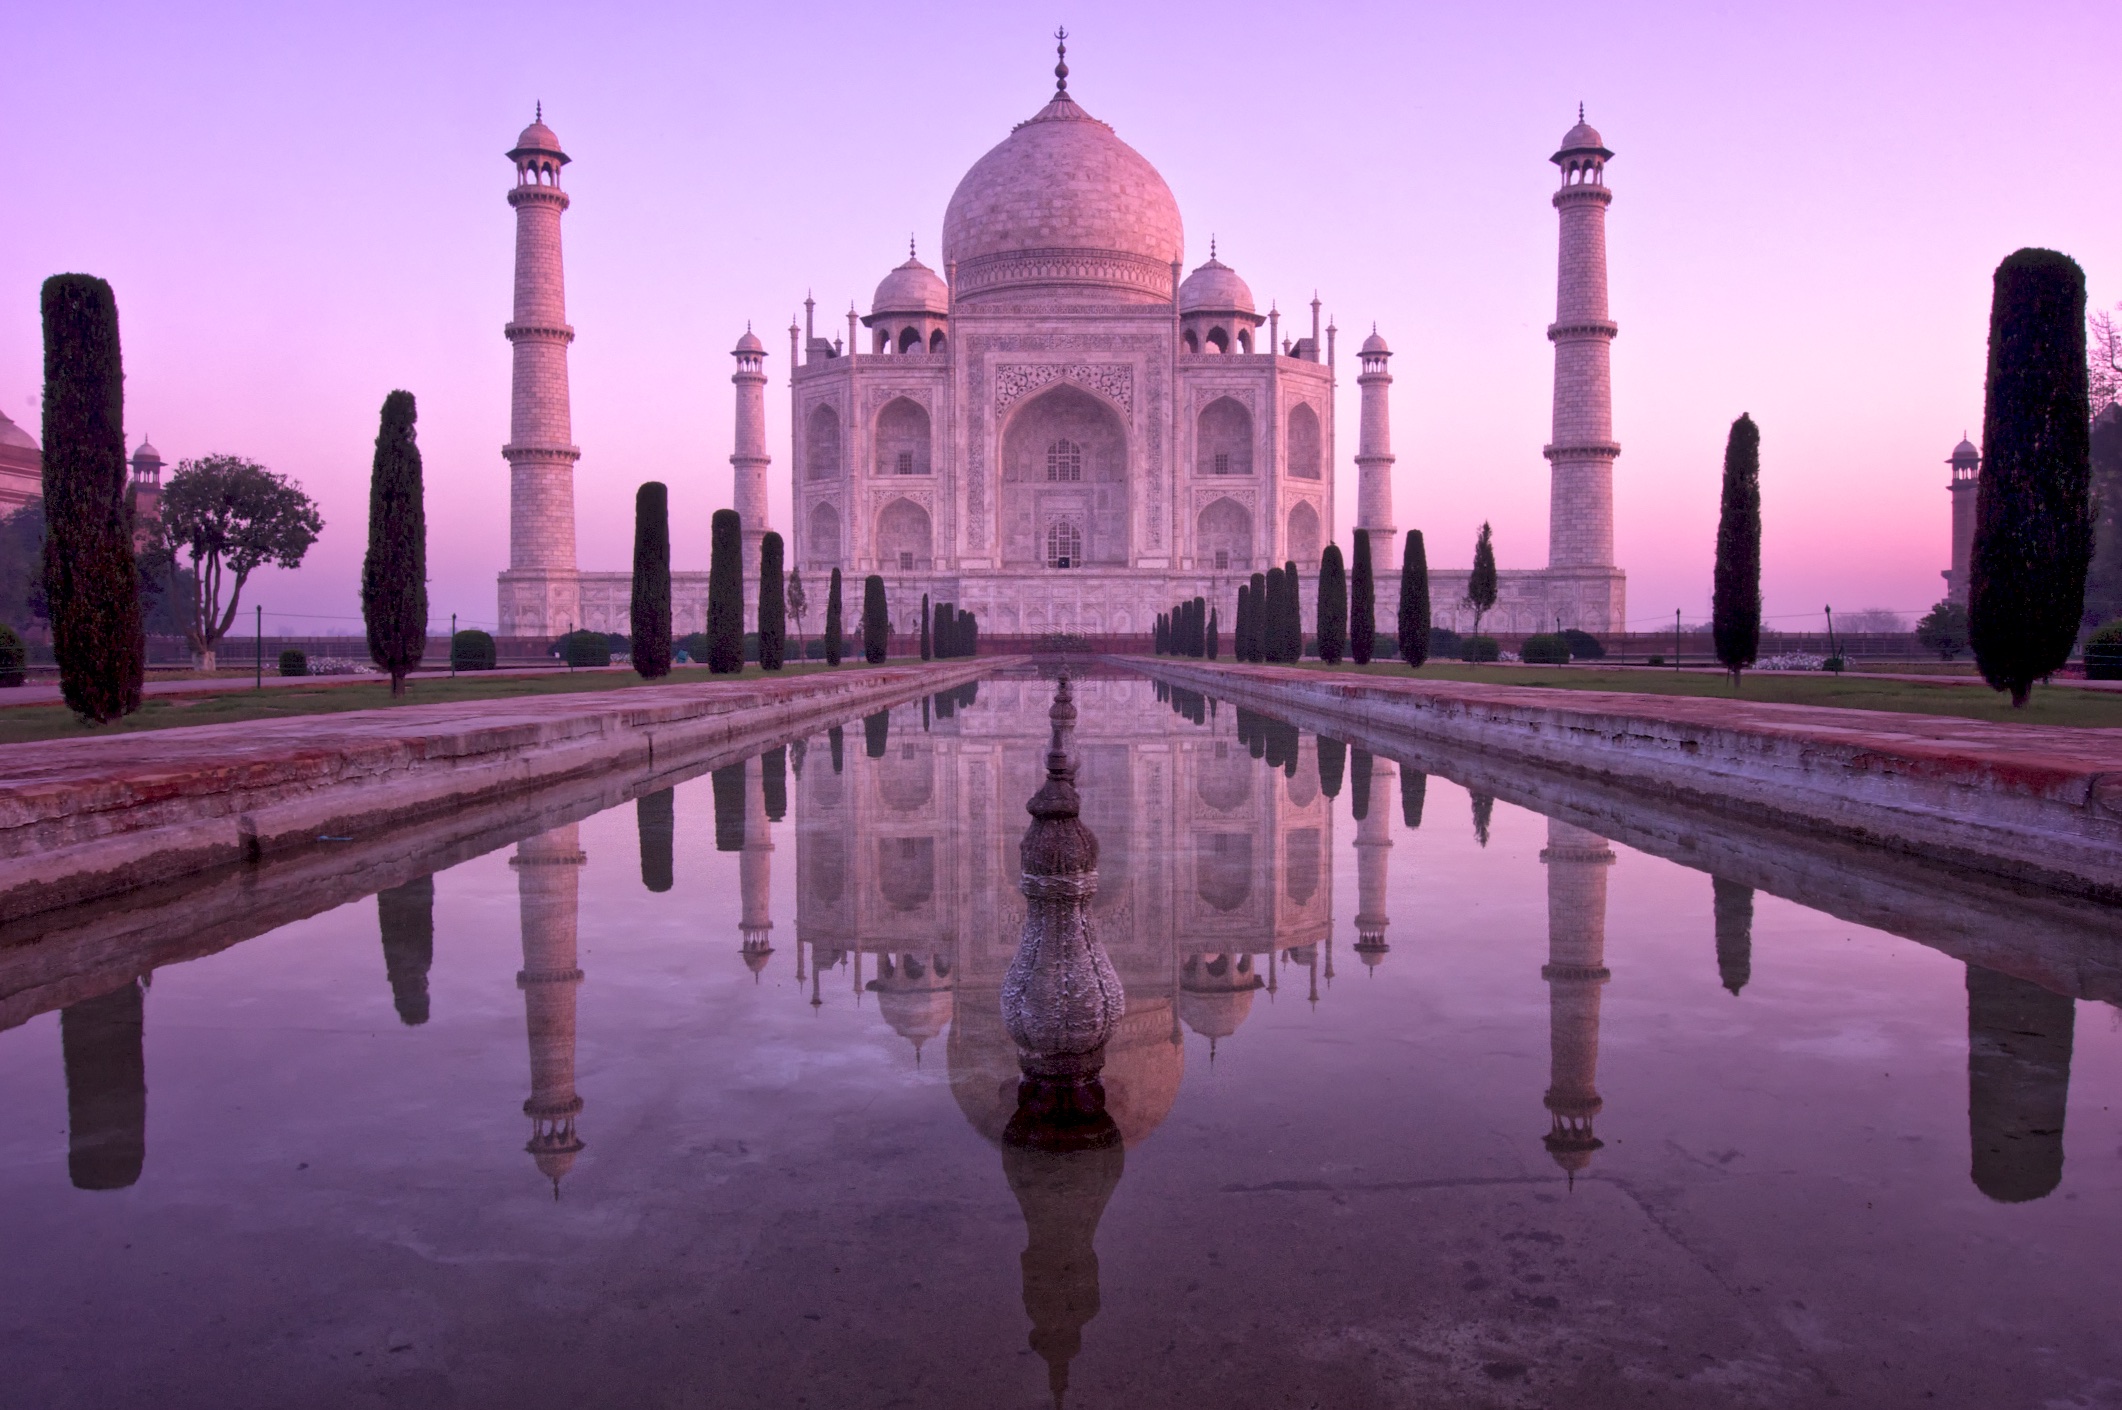 Taj Mahal - Agra - India